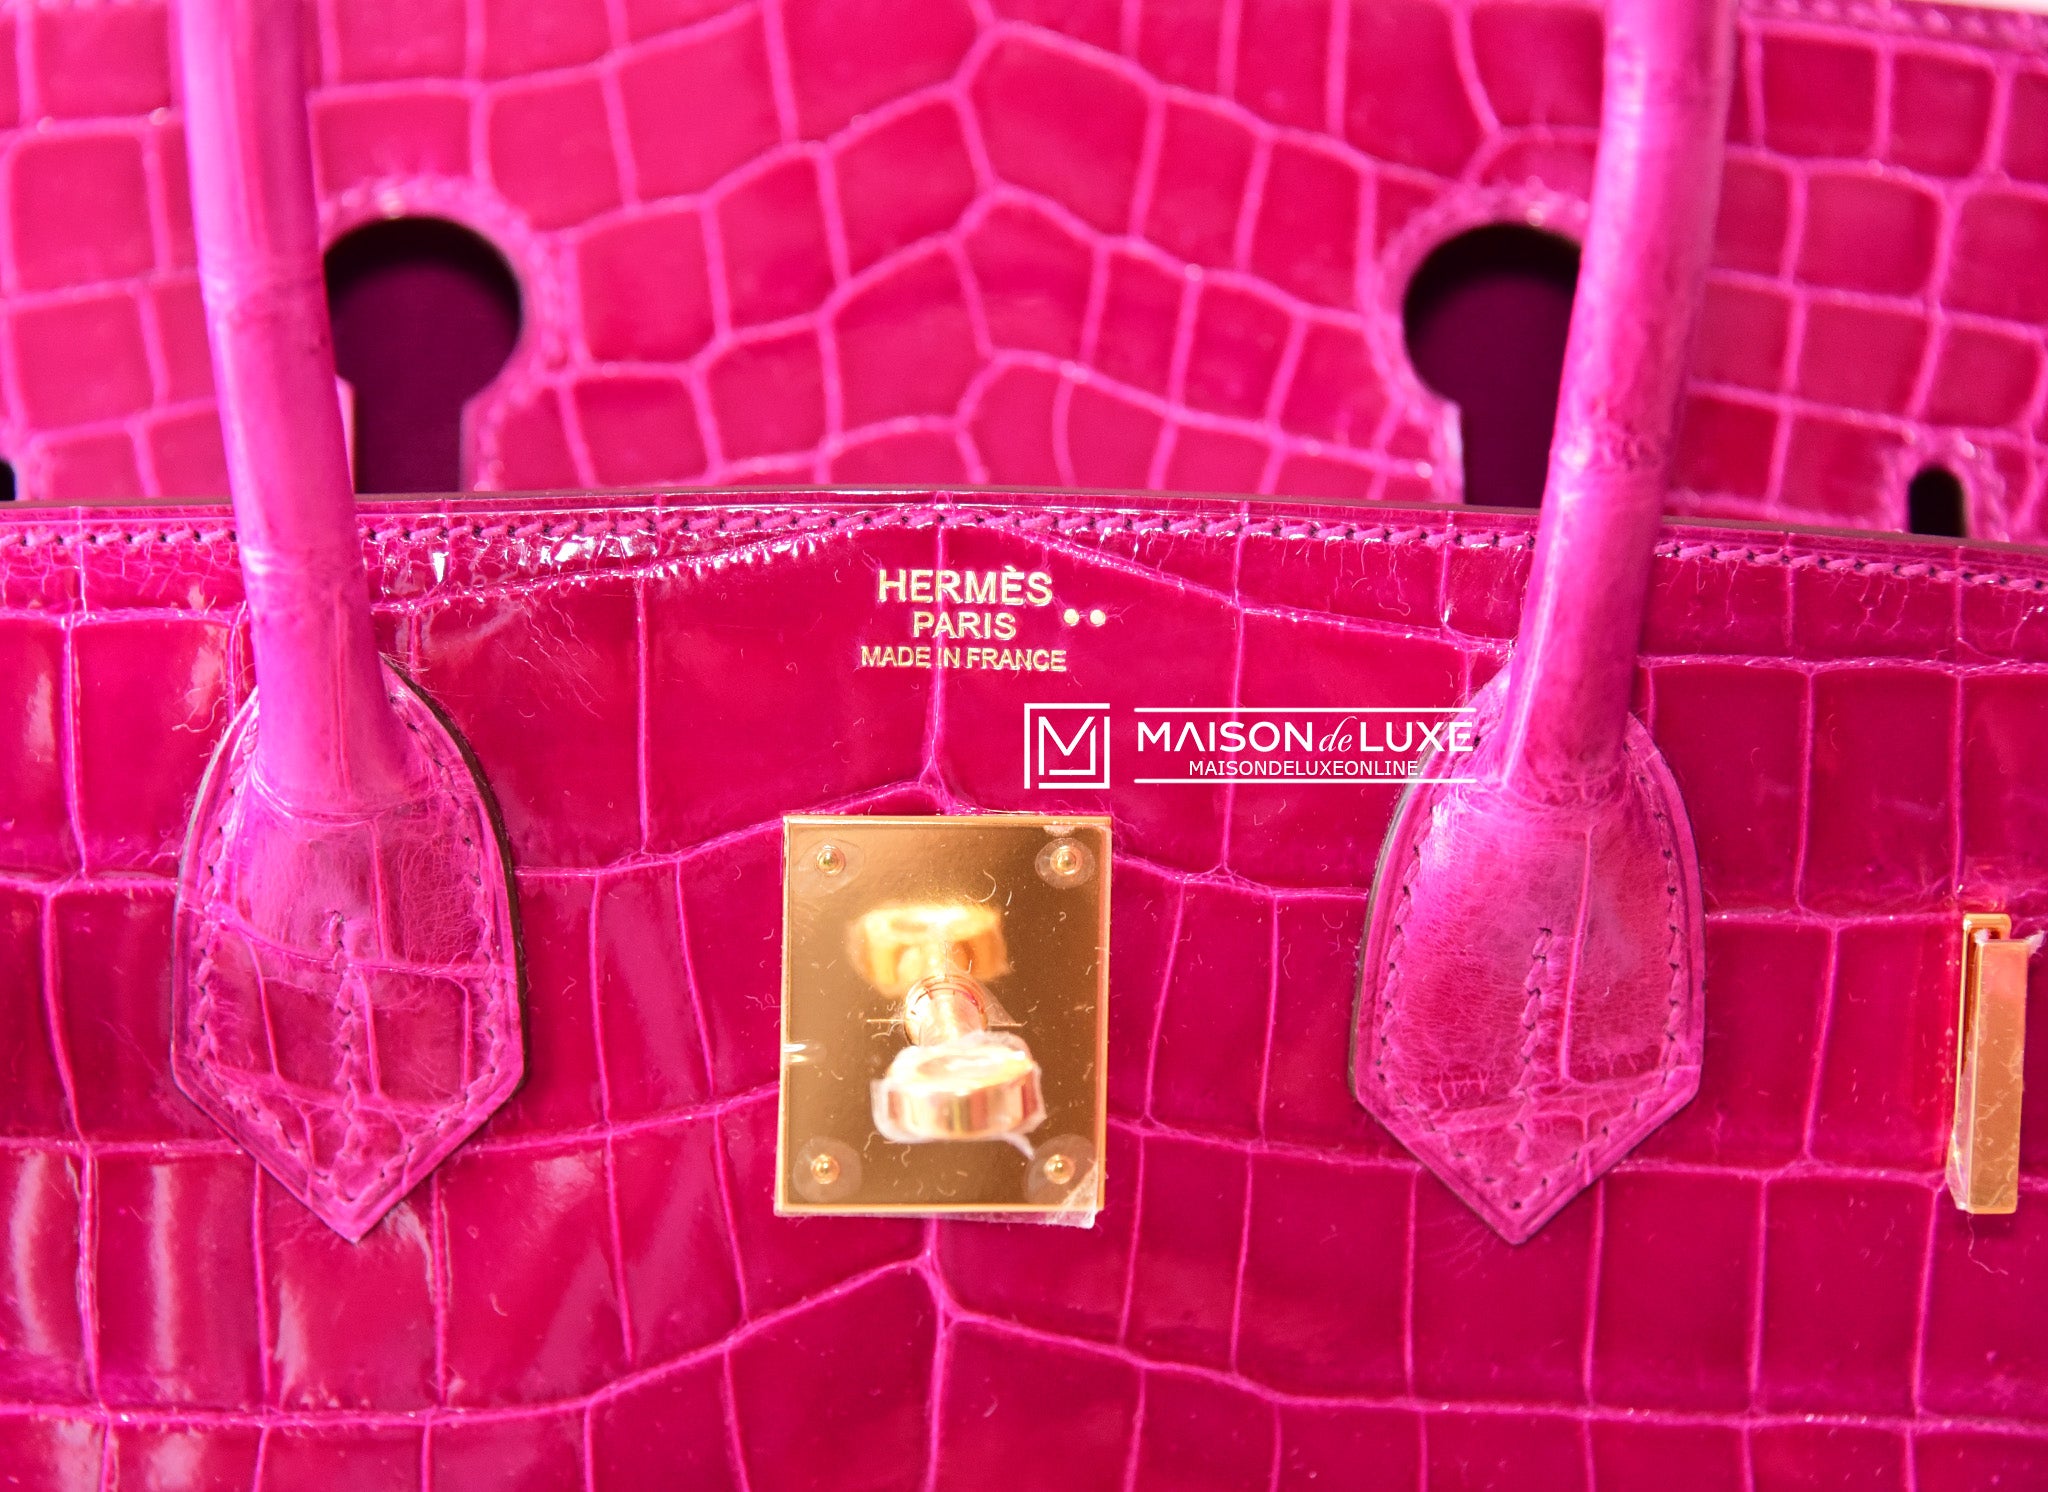 HERMÈS Birkin Rose Bags & Handbags for Women for sale